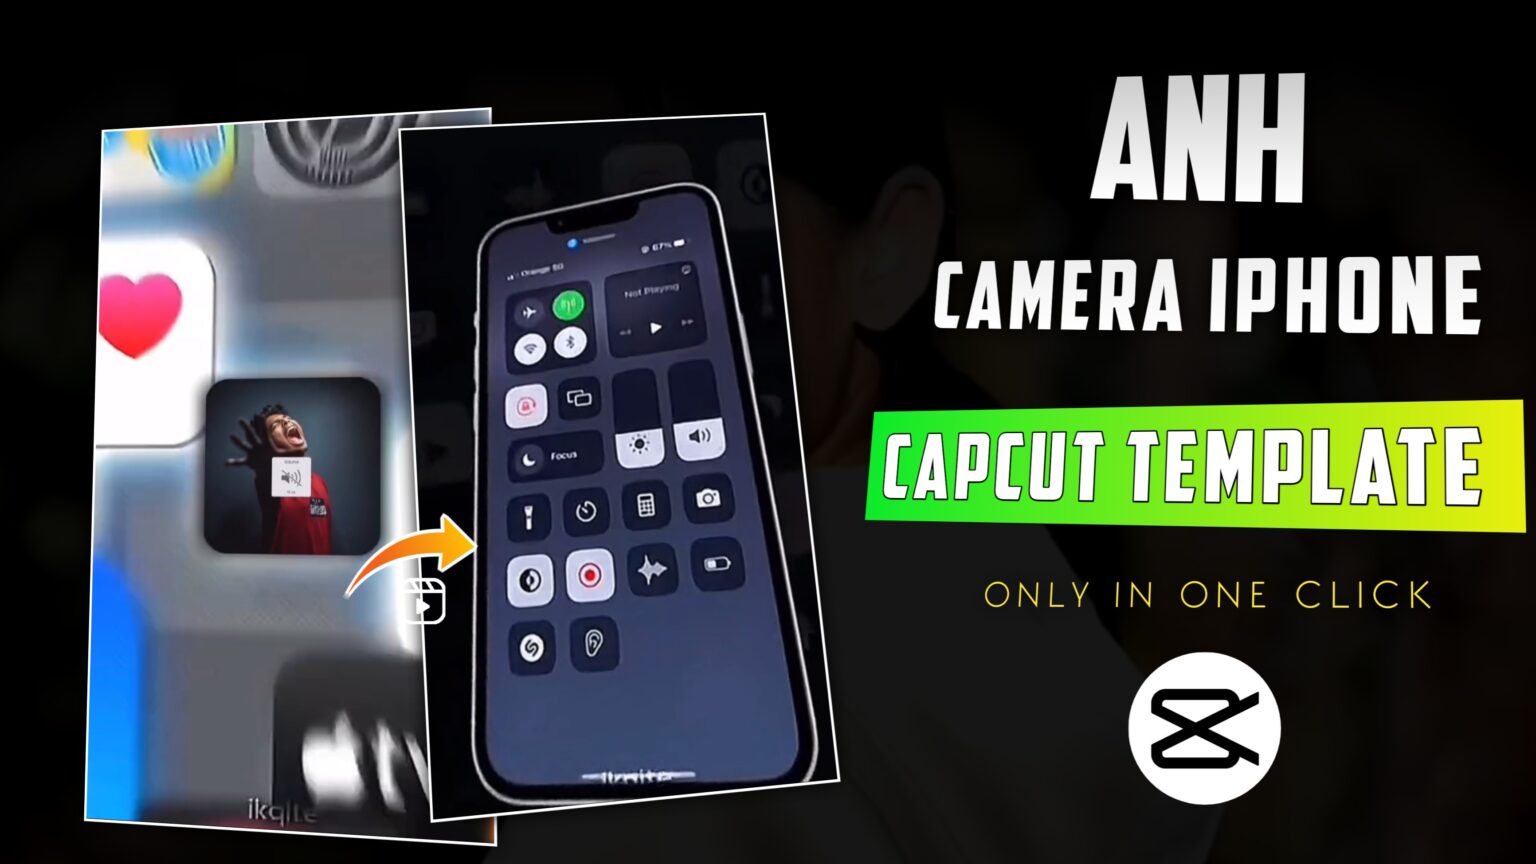 anh-camera-iphone-capcut-template-link-2023-iphone-capcut-template